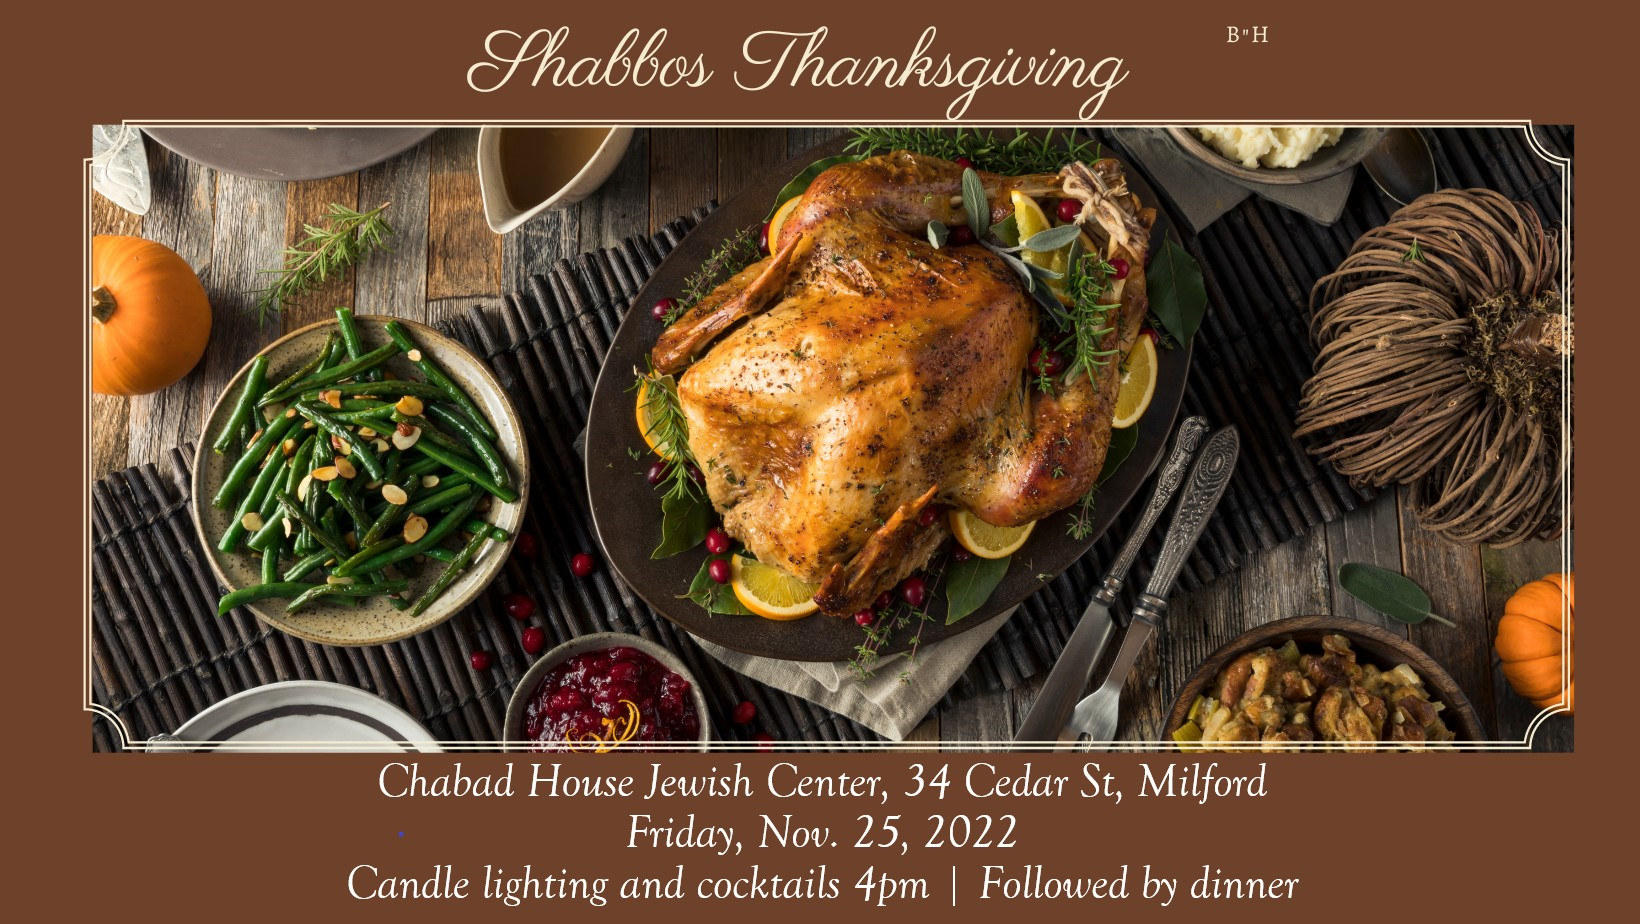 Shabbos Thanksgiving